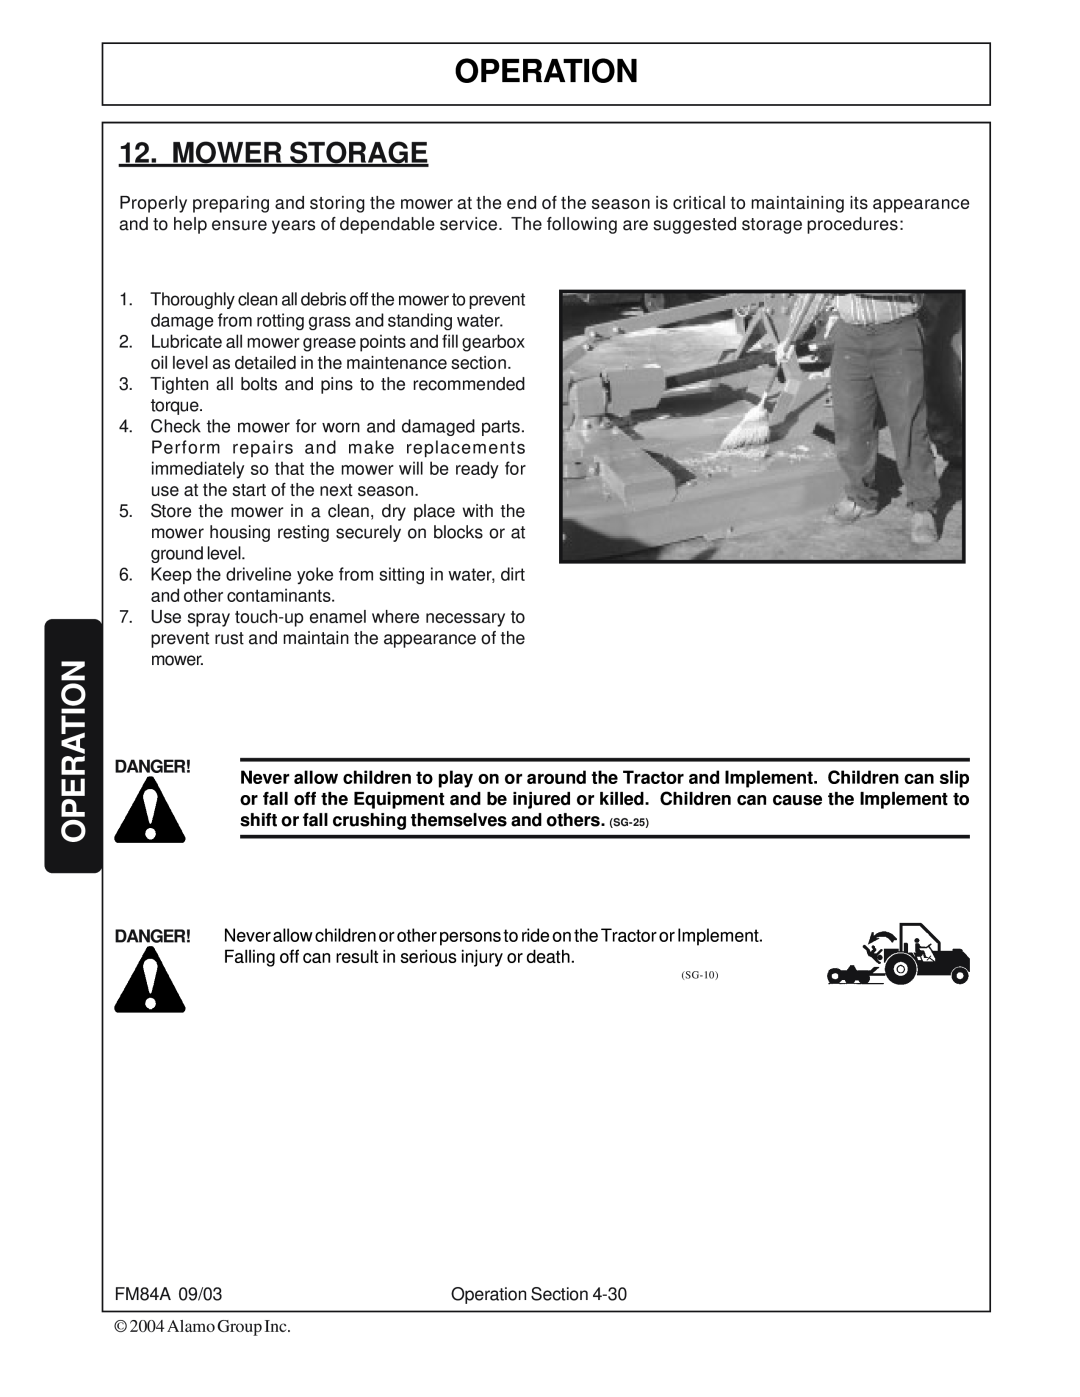 Servis-Rhino FM84A manual Mower Storage, Operation 